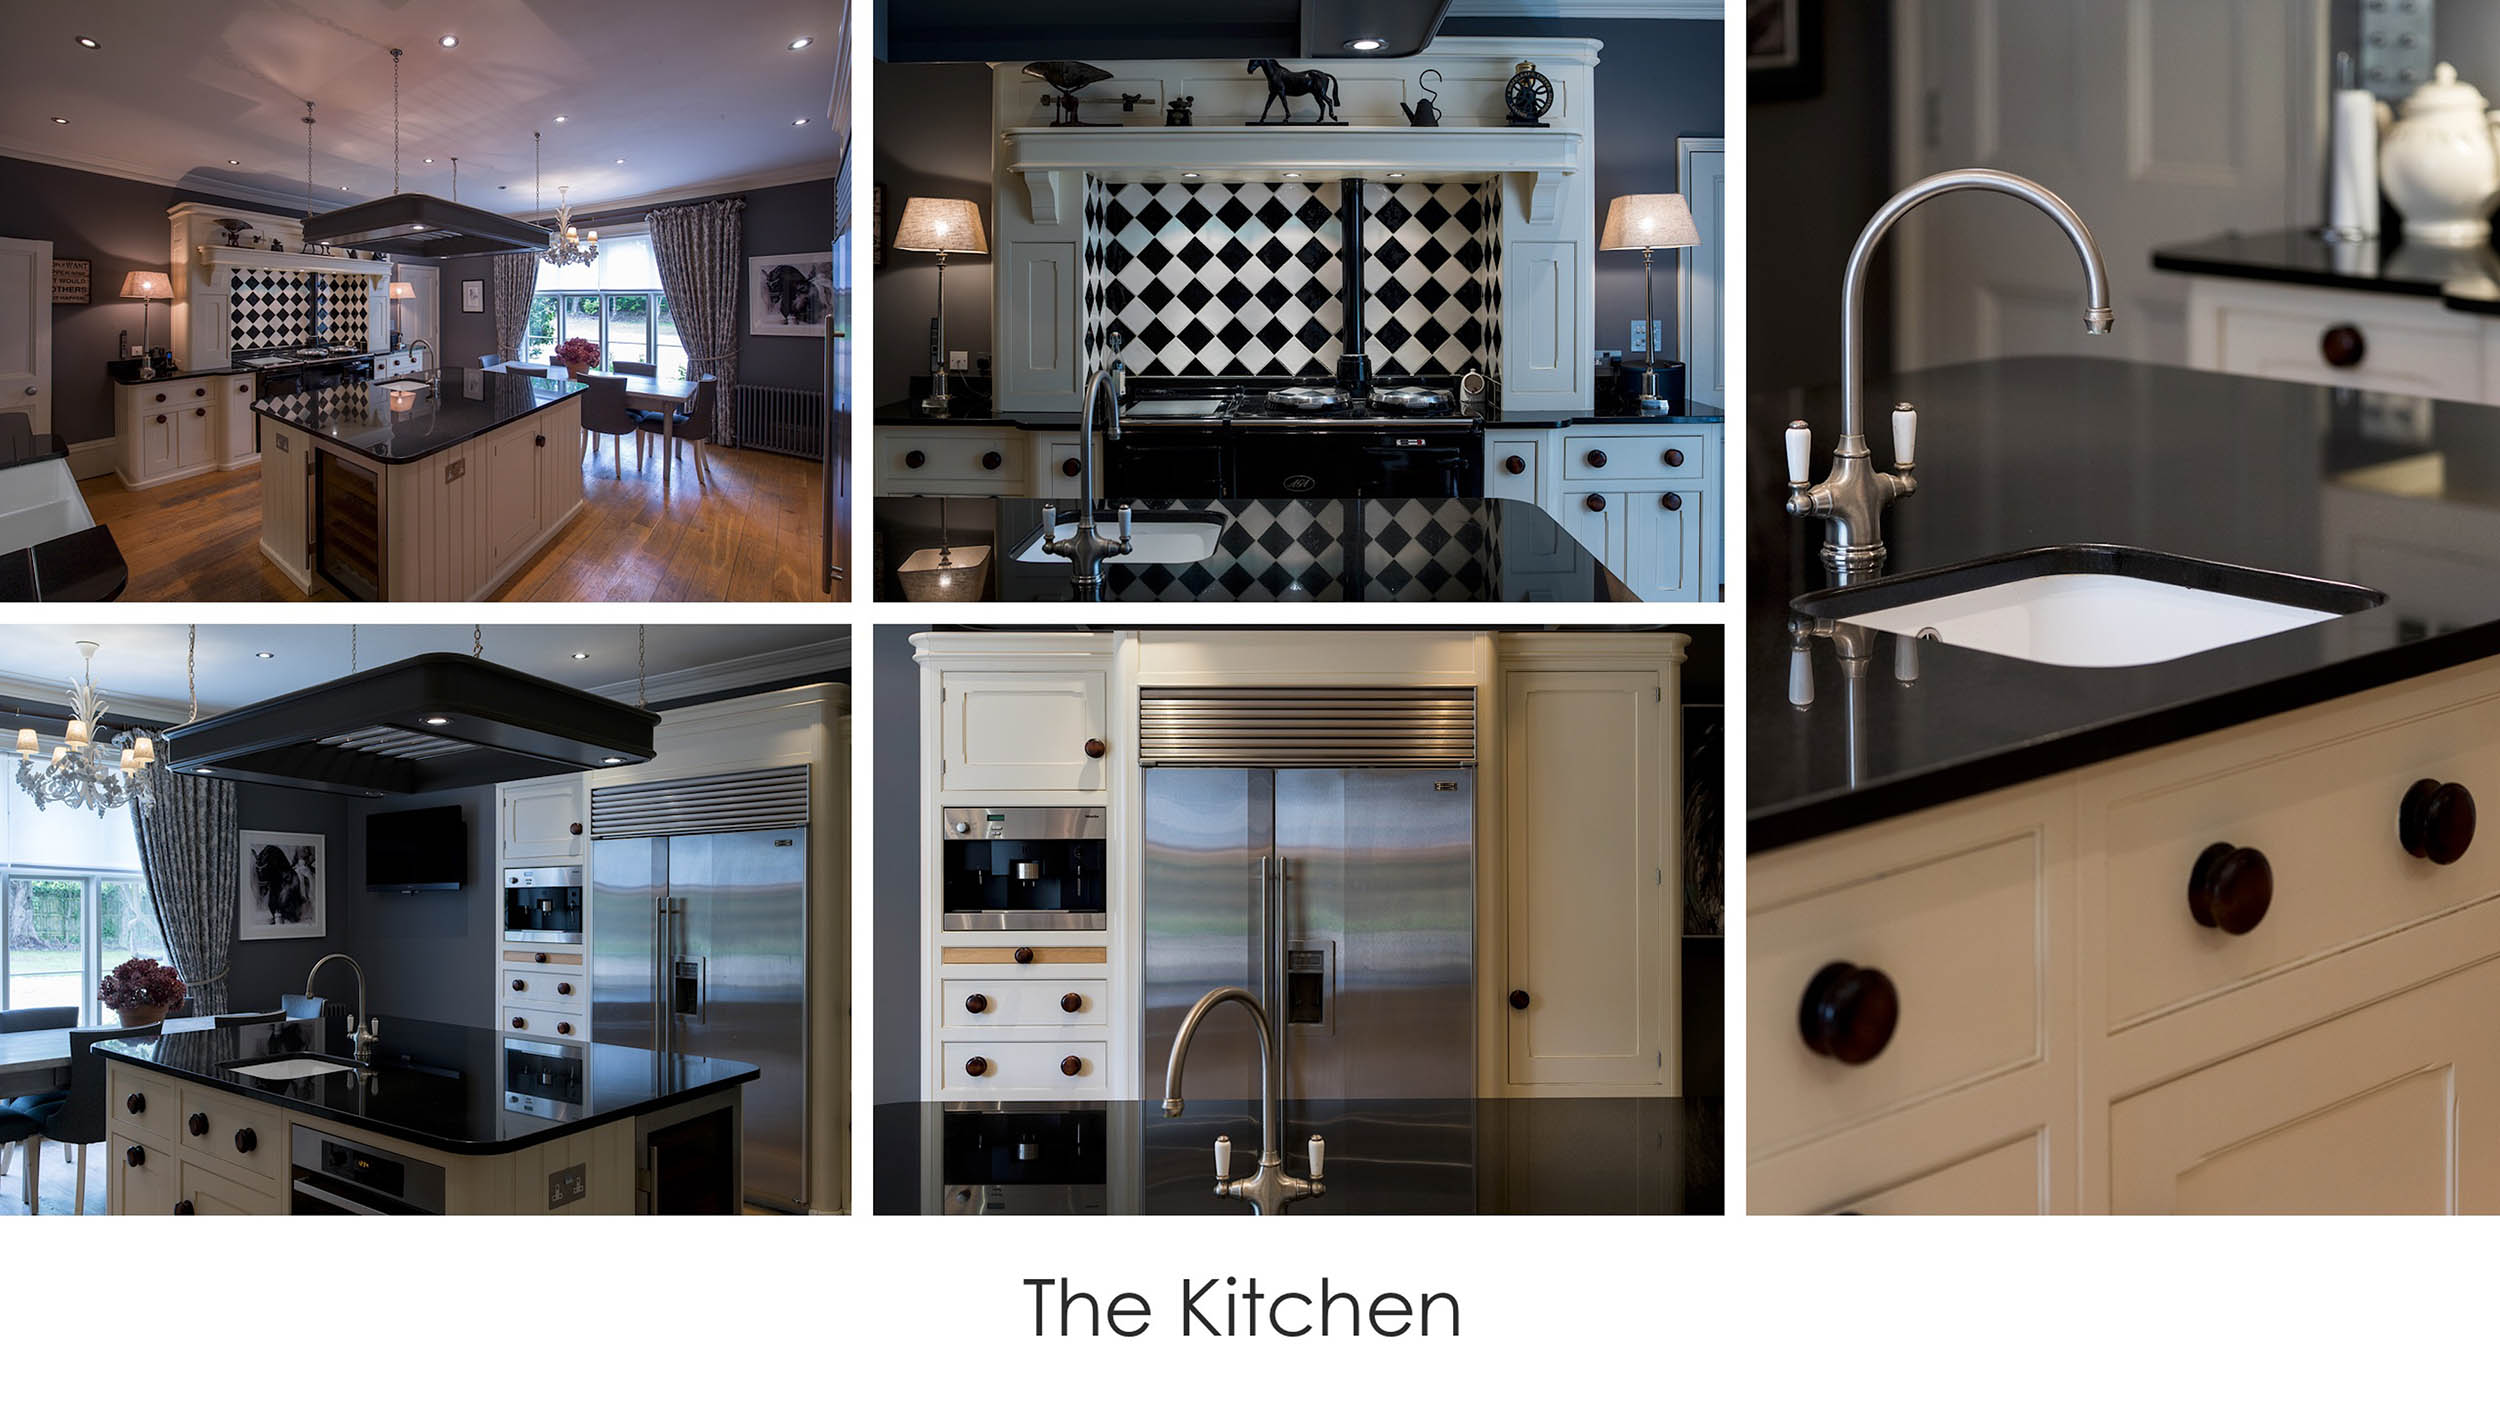 The Kitchen - Pennybridge House - Real Estate Development Projects by Gabriella Atkinson.